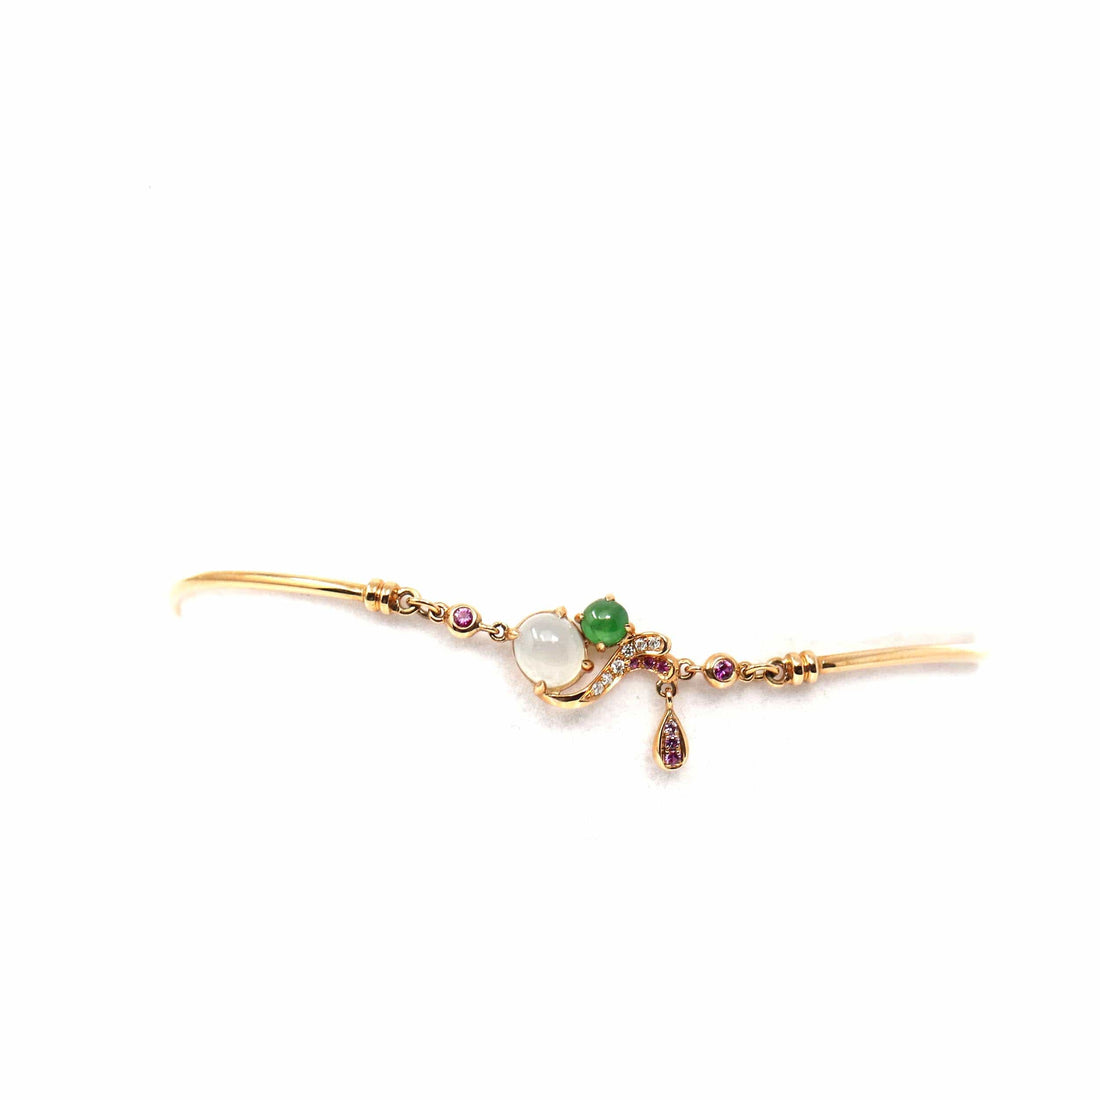 Baikalla Jewelry Gold Jade Bracelet Copy of 18k Rose Gold "Morning Glory" Half Bracelet Bangle with Green Imperial Jade & Diamonds